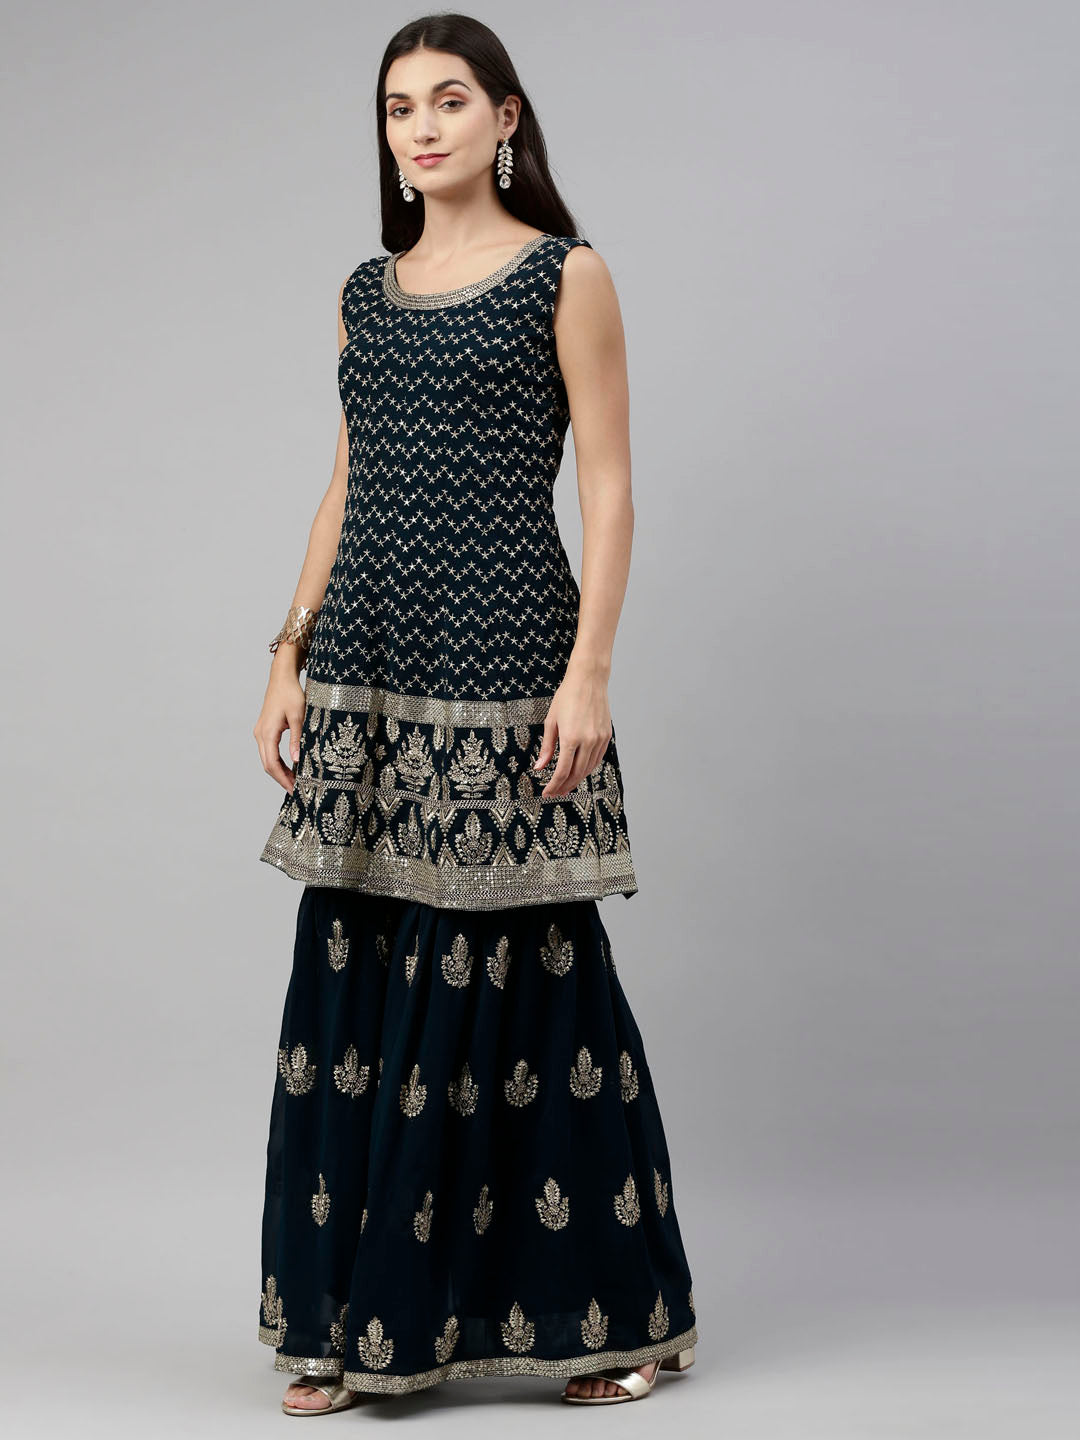 Neeru'S Blue Color, Georgette Fabric Suit-Short Anarkali